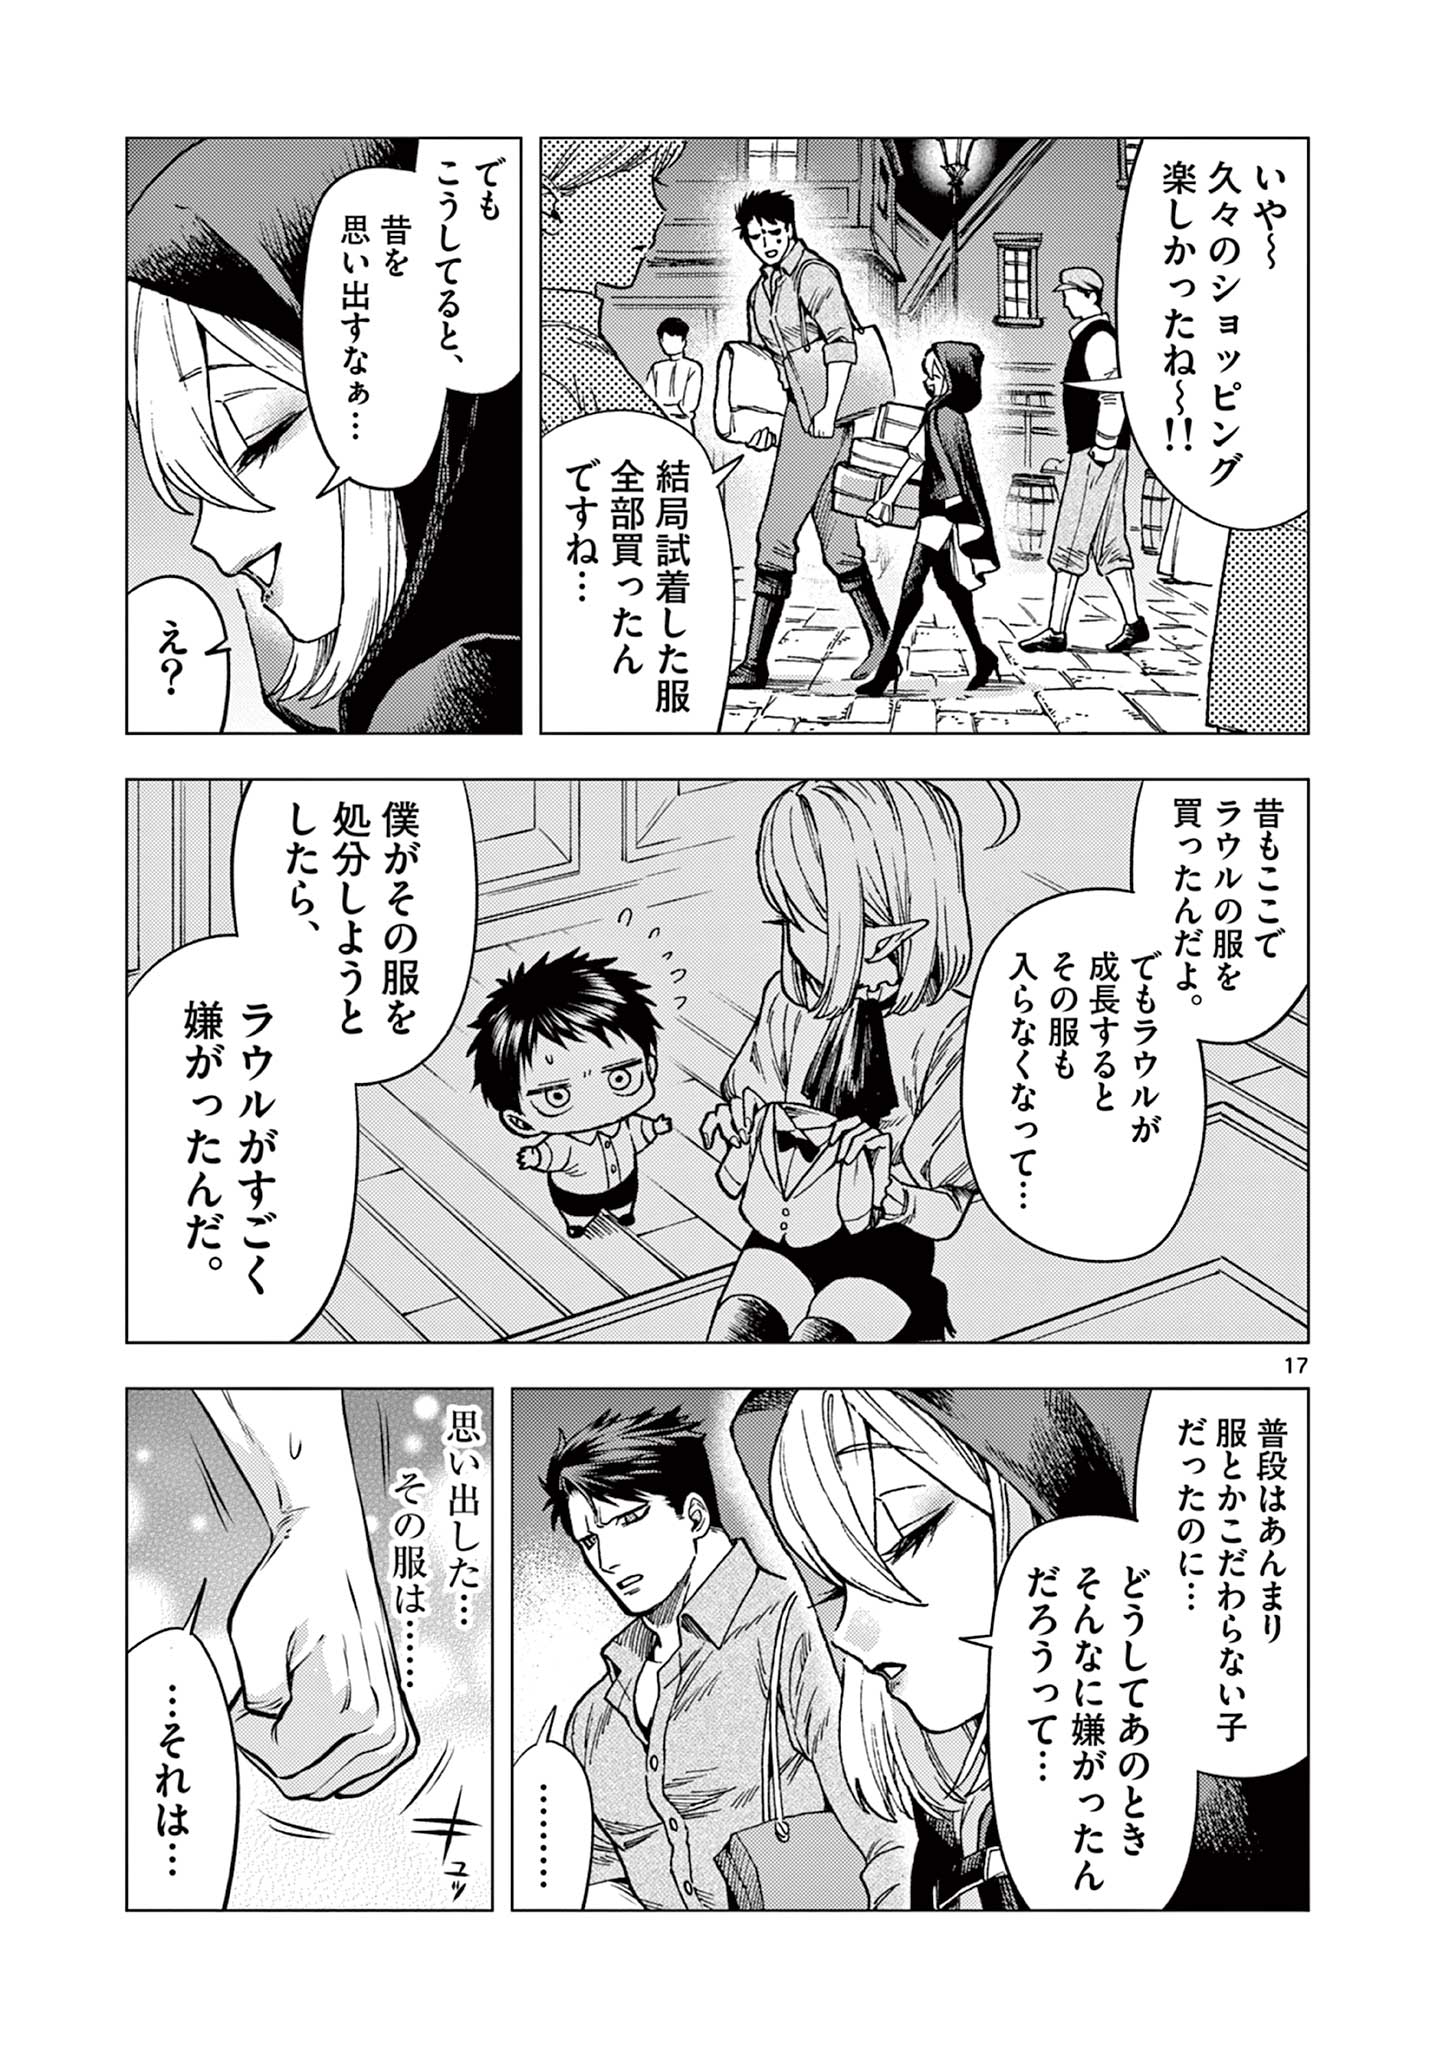 Raul to Kyuuketsuki - Chapter 3 - Page 17